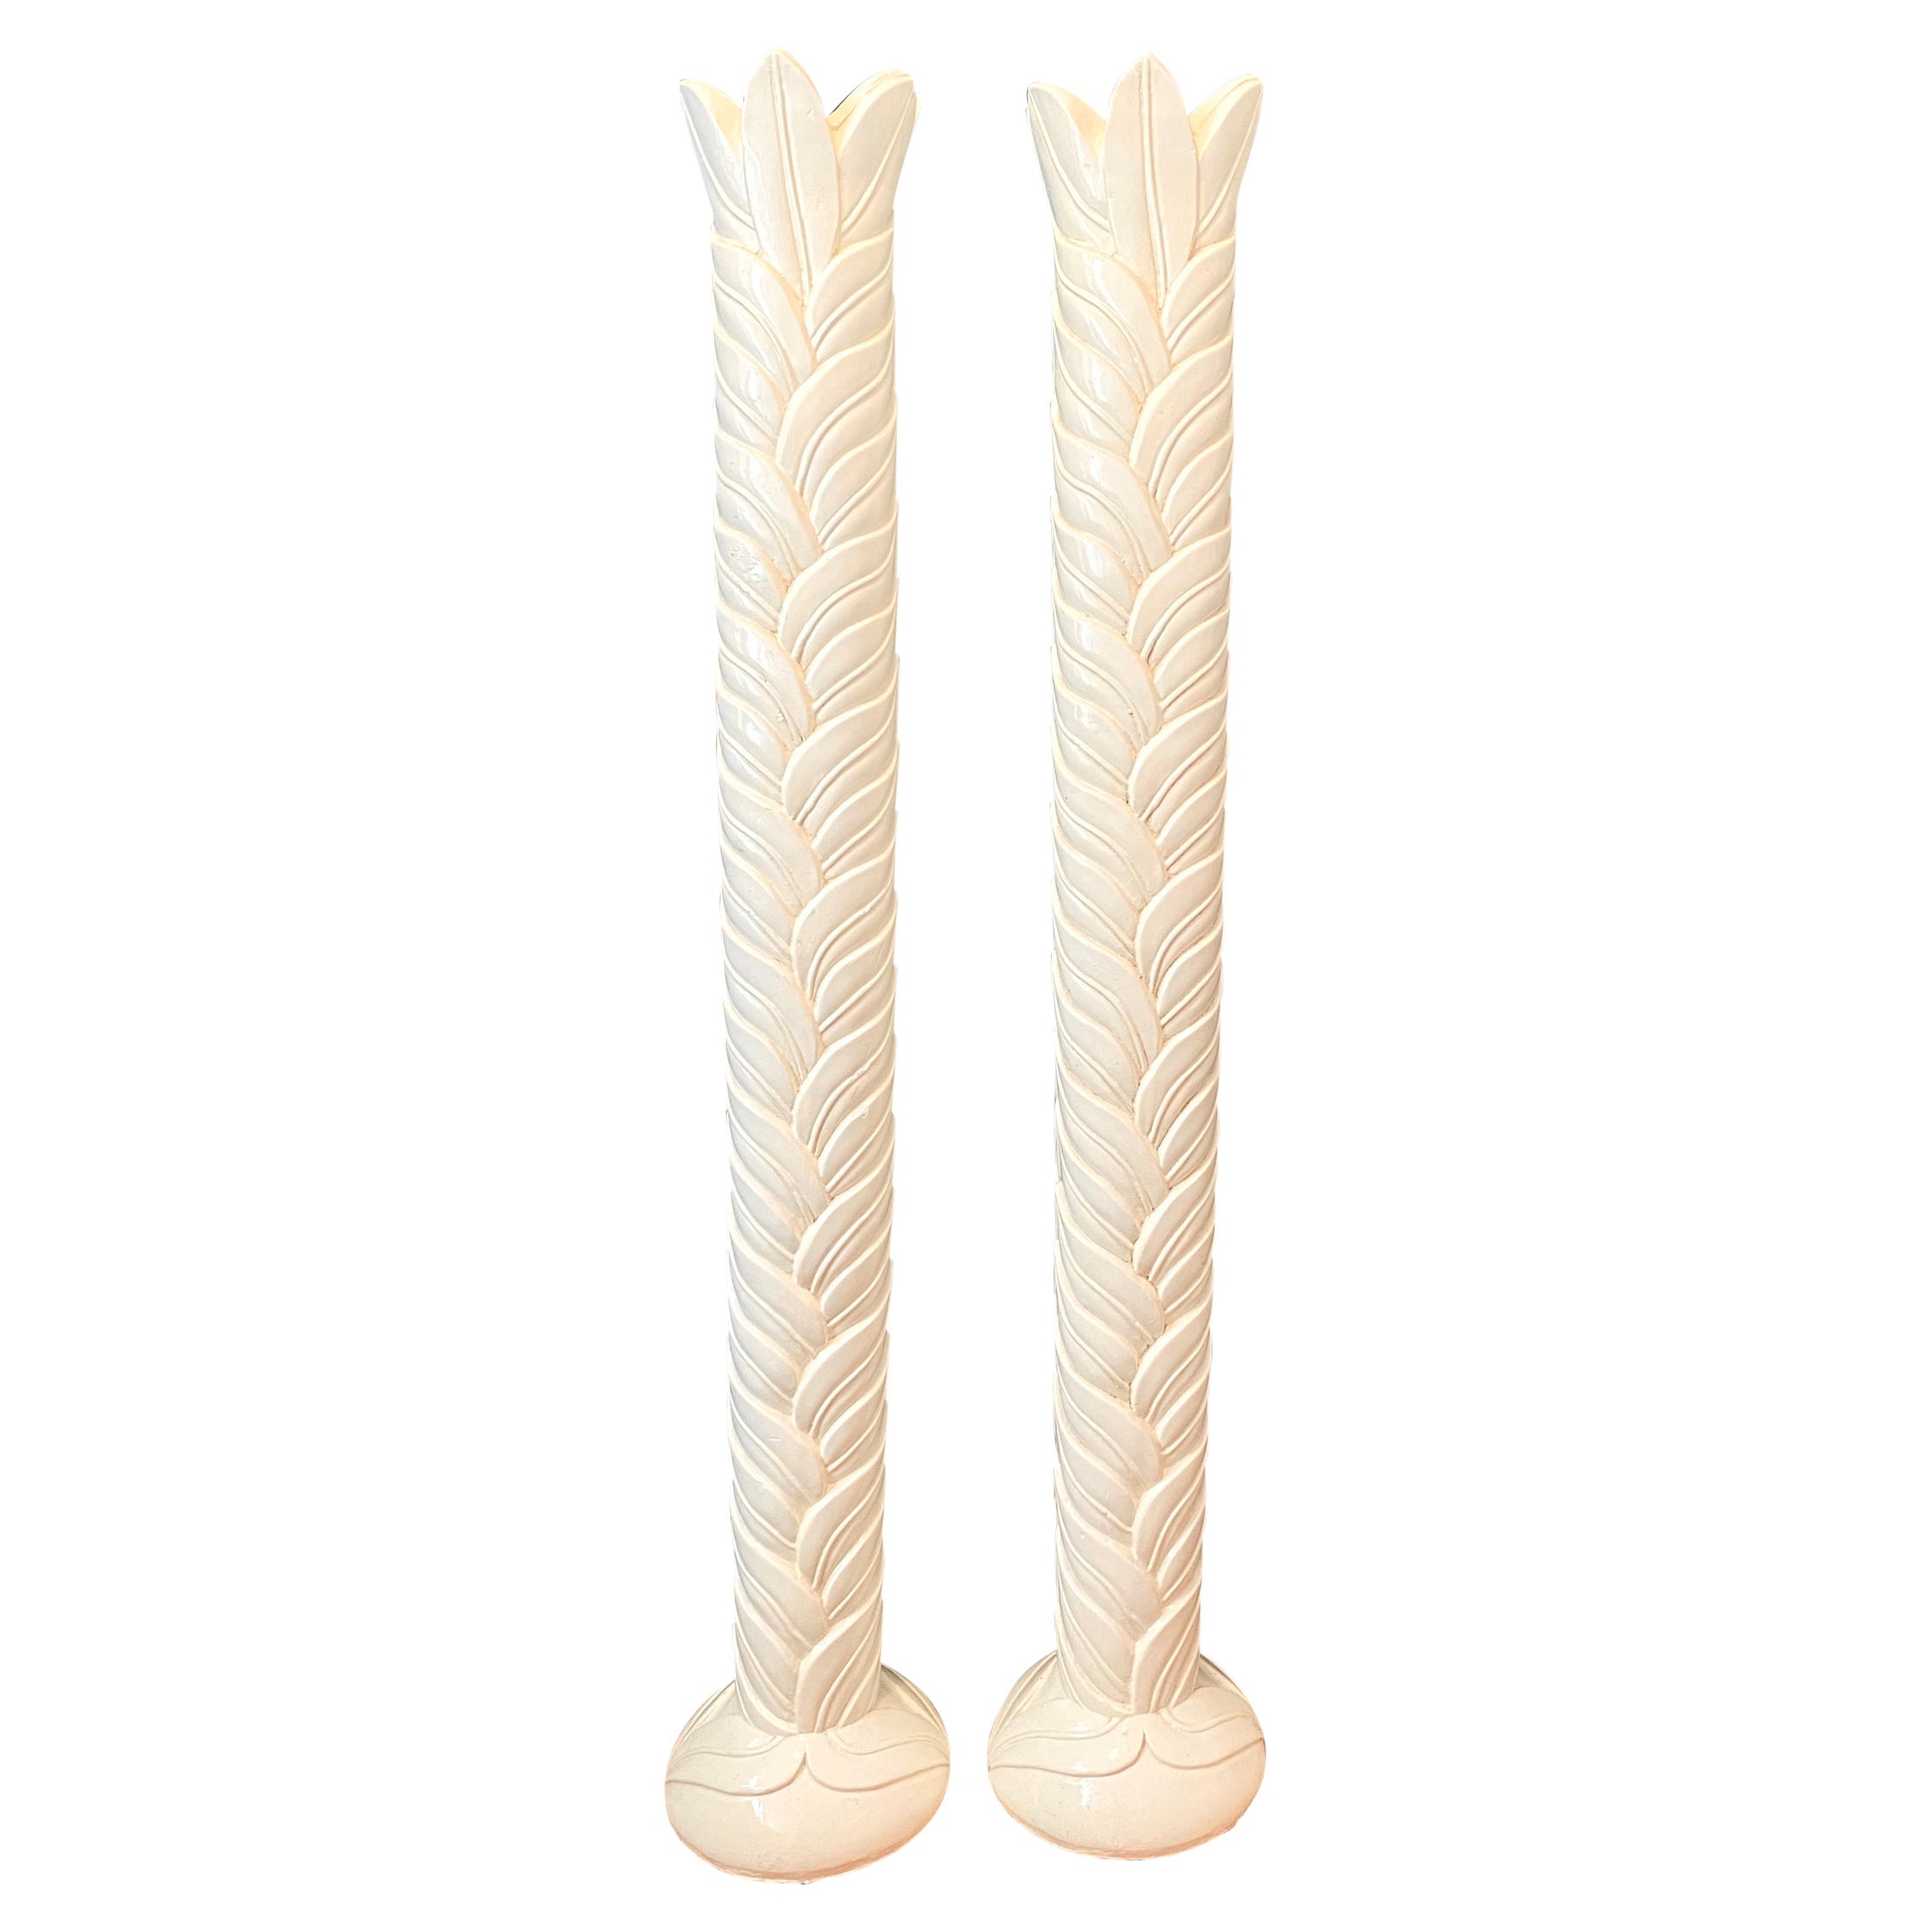 Pair of Tall Decorative Palm Columns